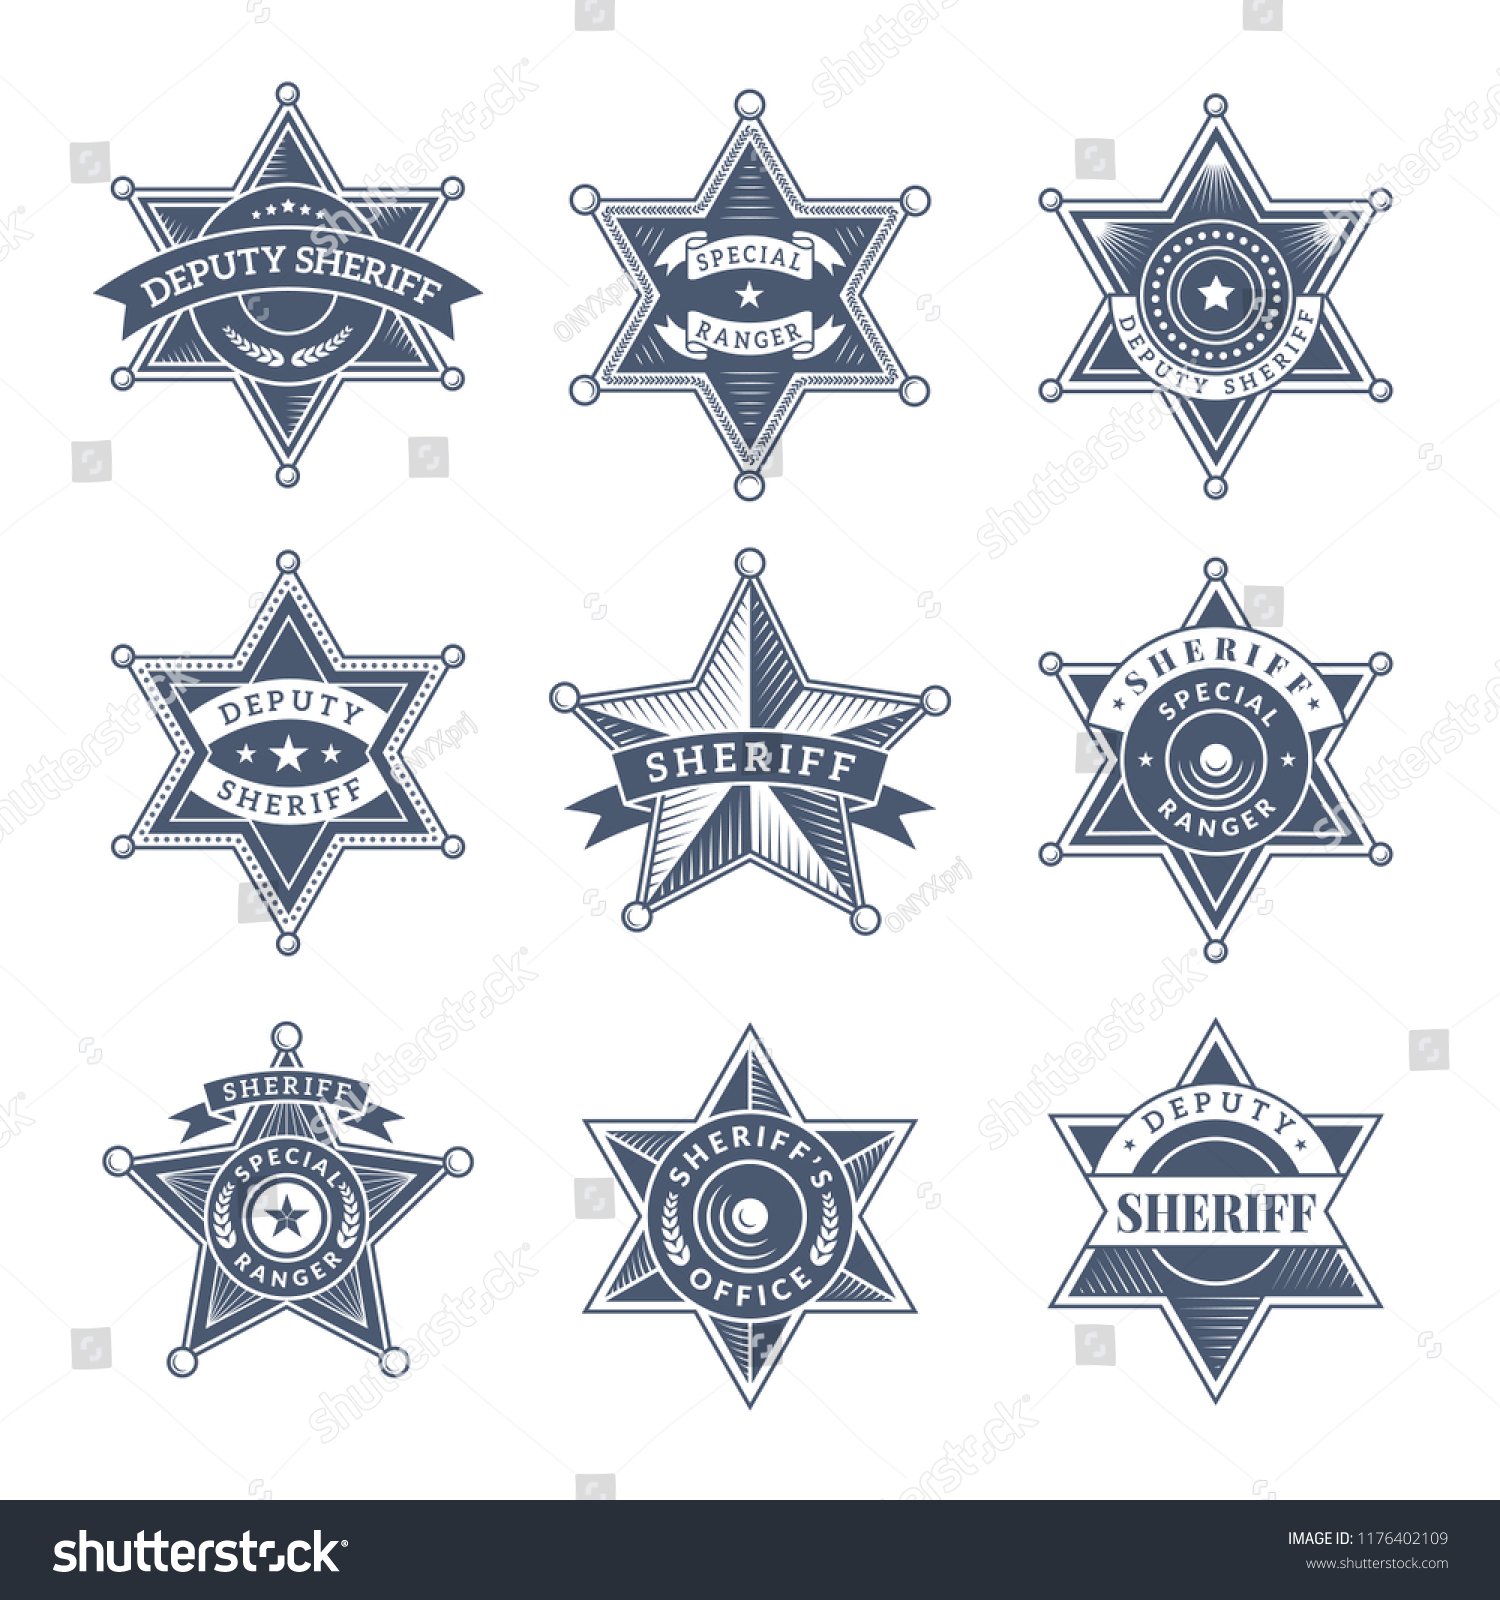 SVG of Security sheriff badges. Police shield and officers logo texas rangers vector symbols. Illustration of sheriff law, officer texas police, badge emblem svg